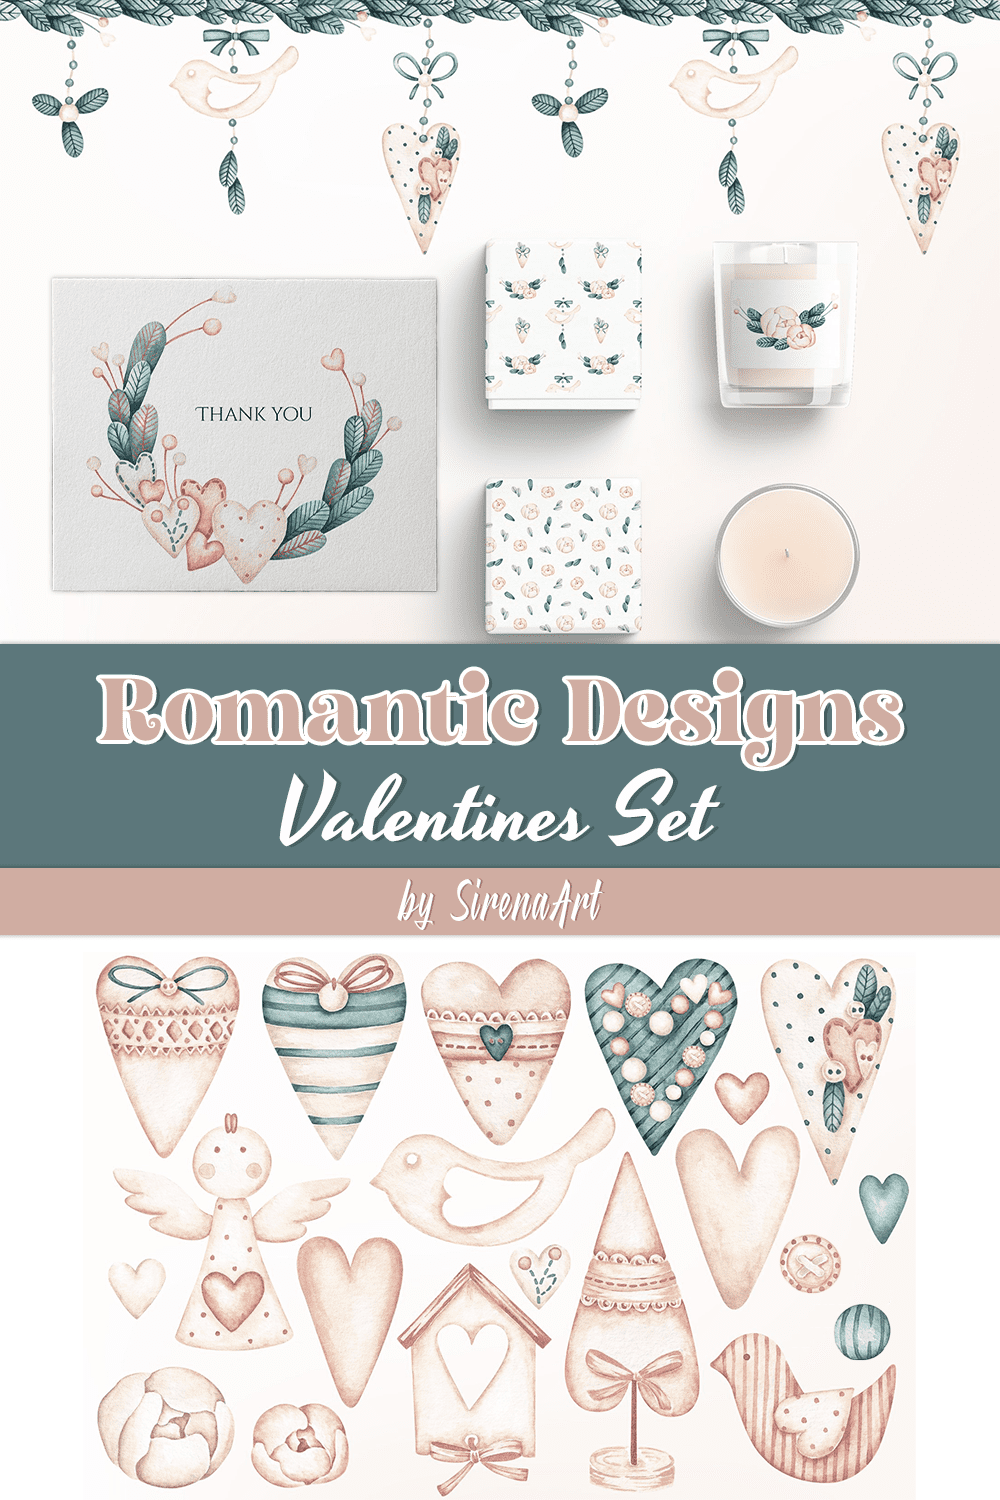 Romantic Designs. Valentines Set - Pinterest.